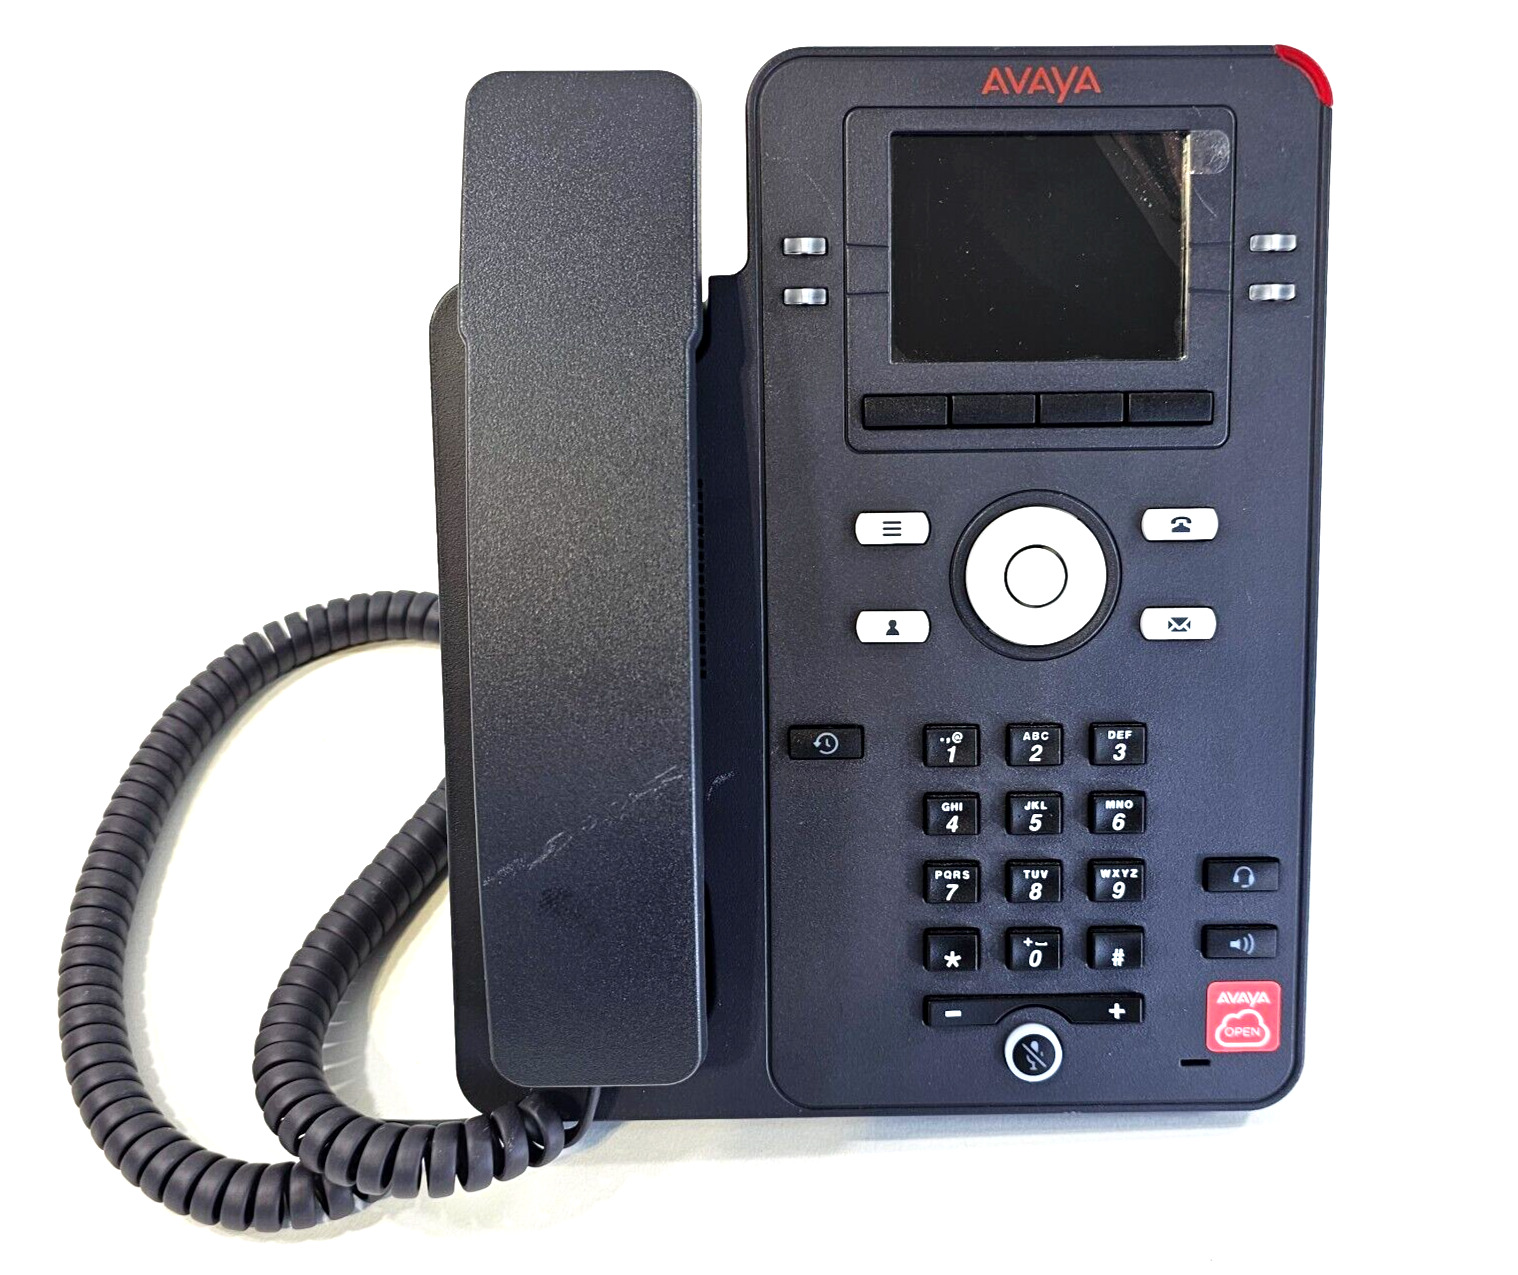 Avaya J139 VoIP 4-Line Business Phone 700513917 - Tested